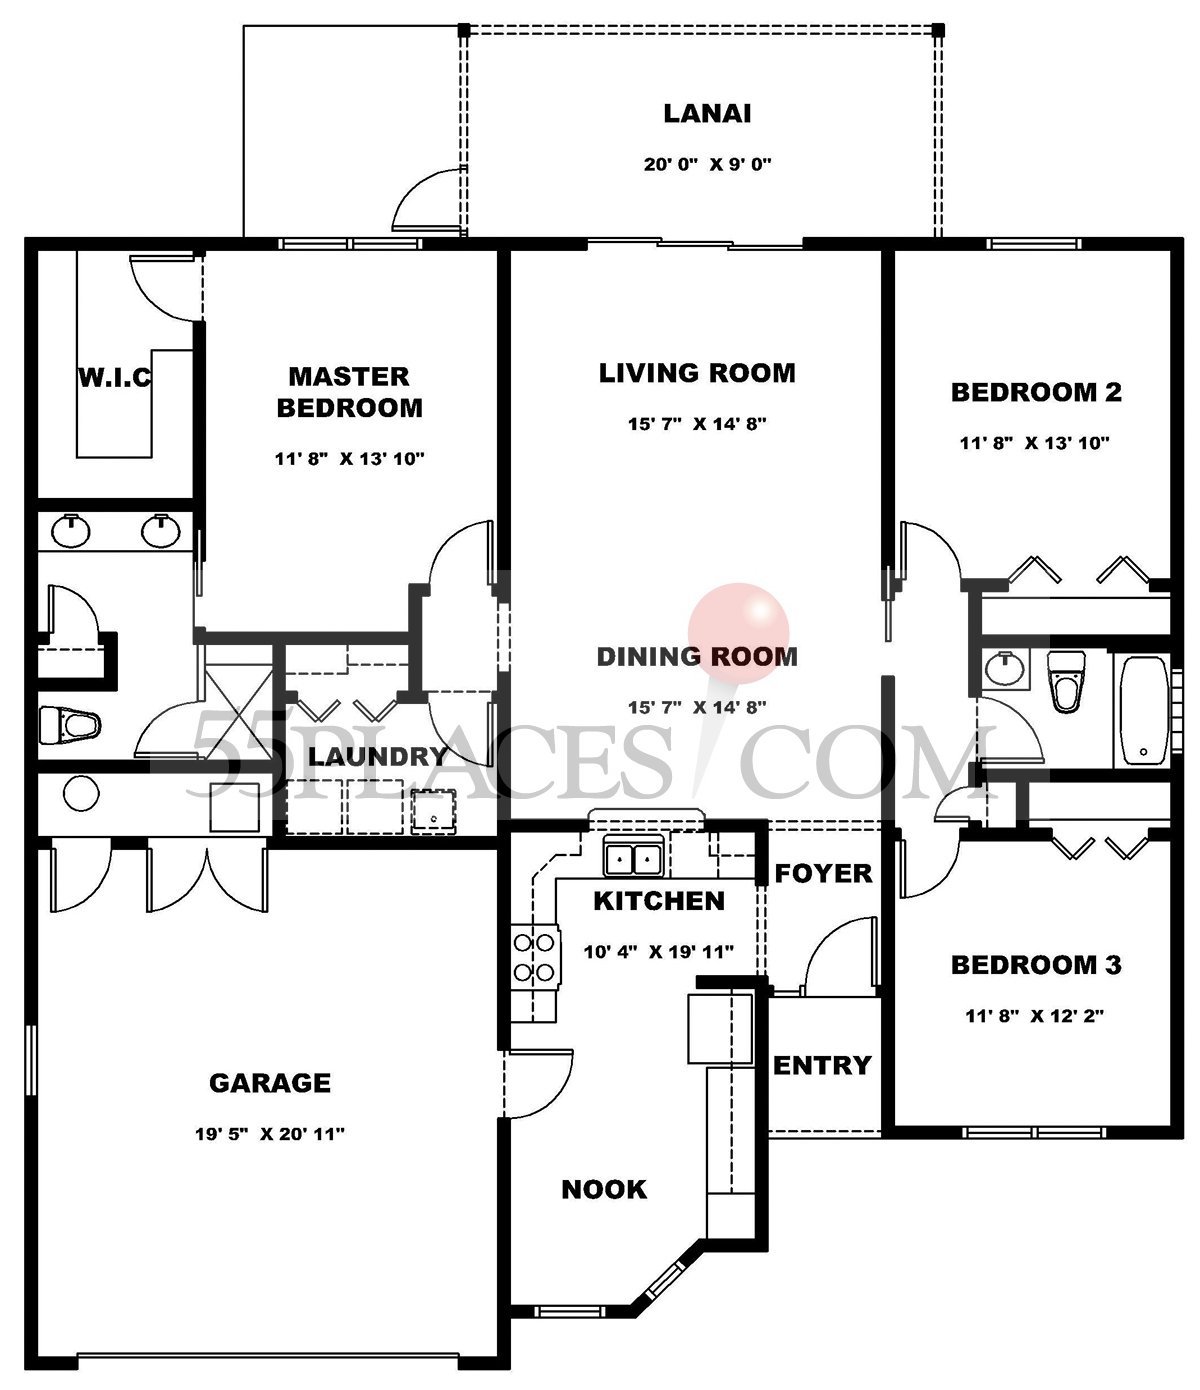 The Villages Designer Home Floor Plans Review Home Decor